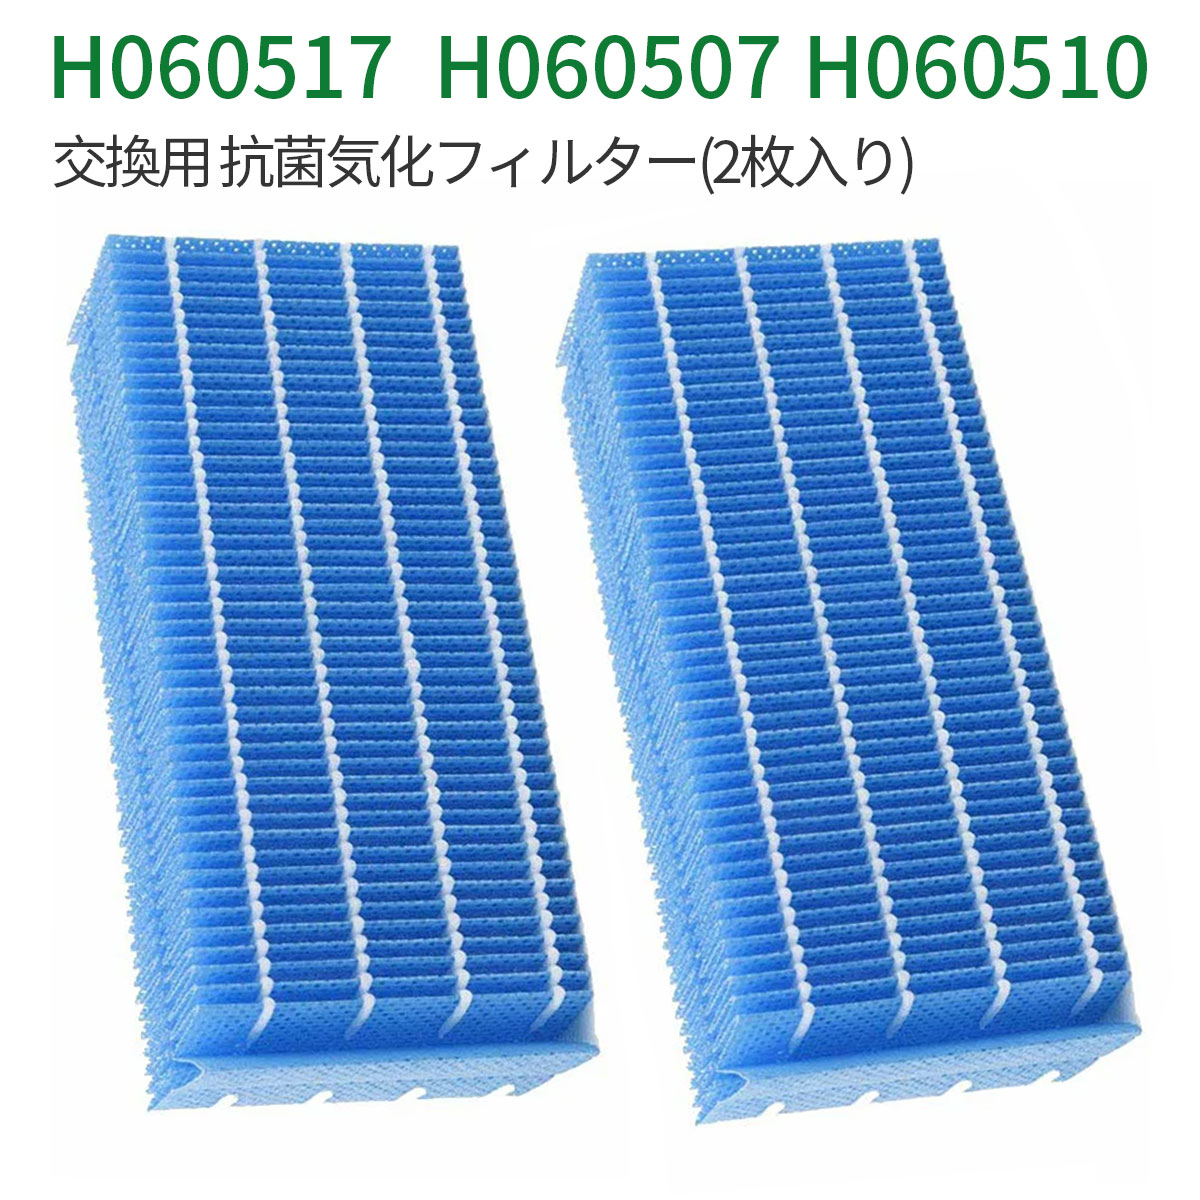 H060517 抗菌気化フィルター h060517 ダイニチ 加湿器 フィルター H060507 H060510 交換用加湿フィルター （互換品/2枚入り）